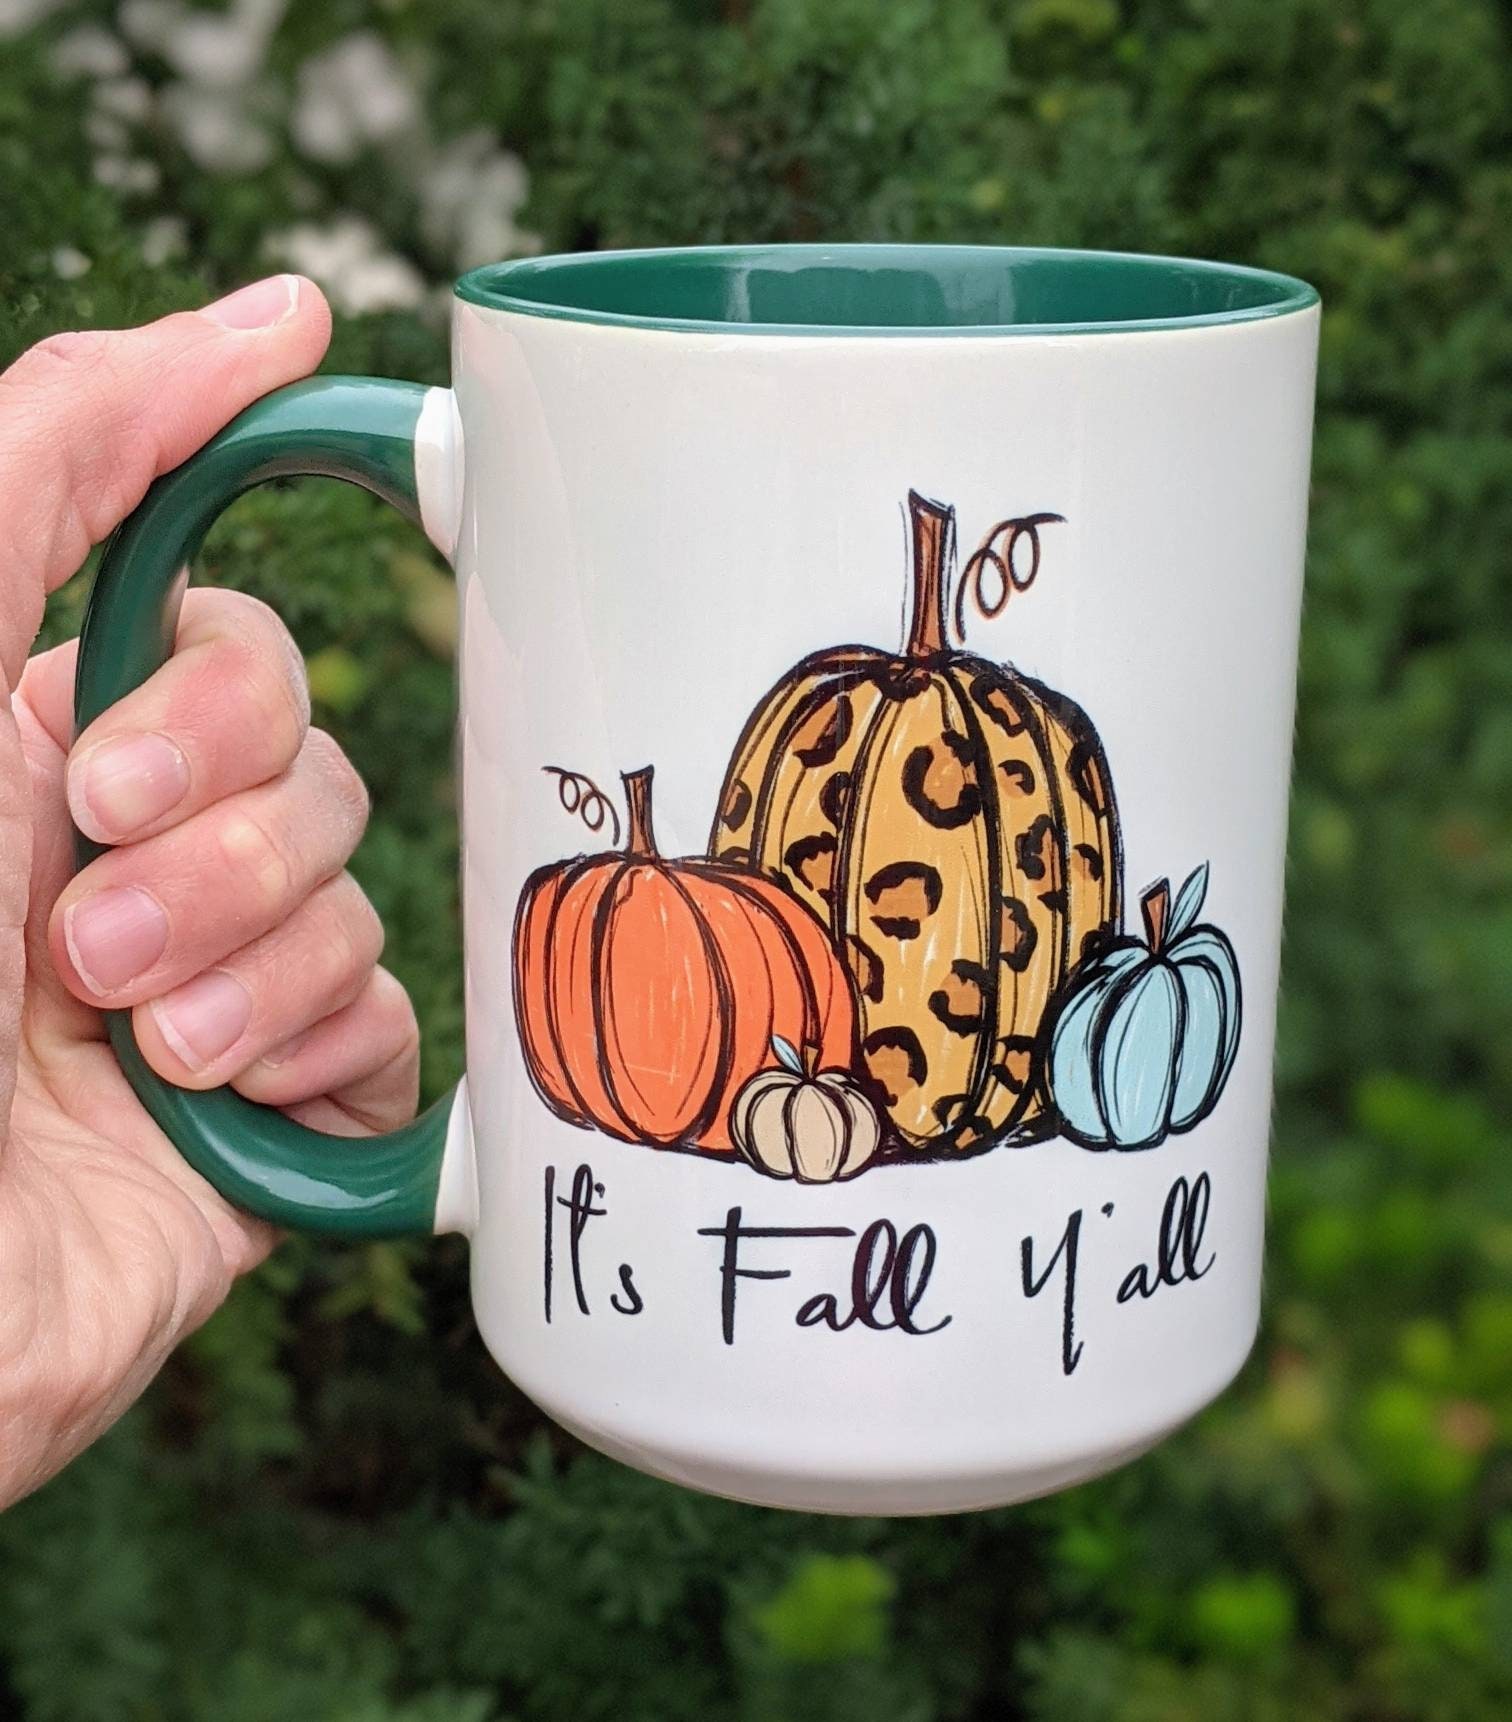 TINYMILLS Fall Harvest Pumpkin 14oz Travel Mug with Sleeve - Eco-Friendly Reusable Plant Fiber Travel Mug, Clear